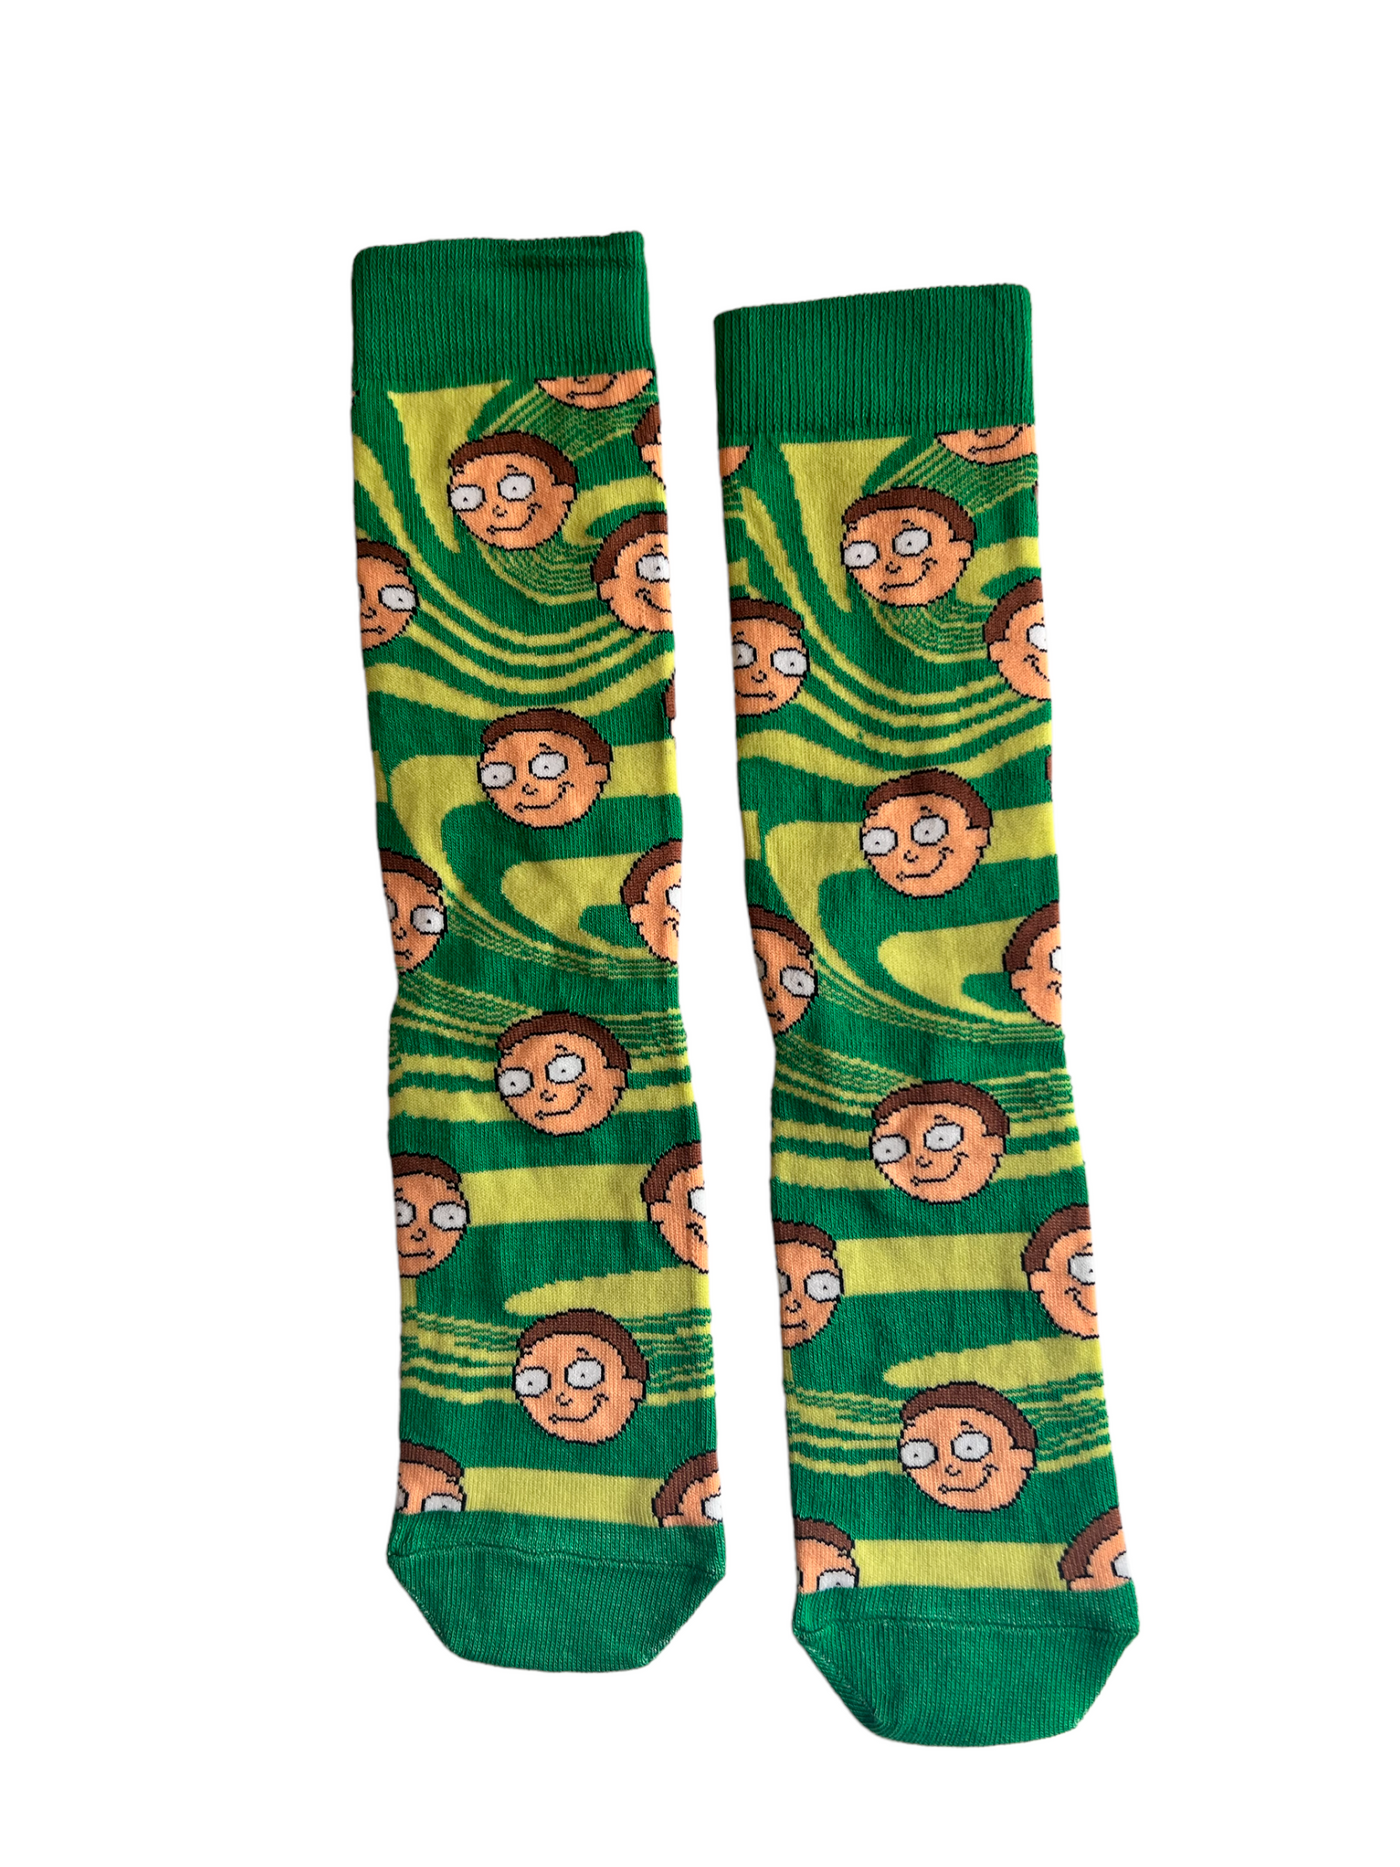 Rick and Morty 2 Socks - PROBOXS